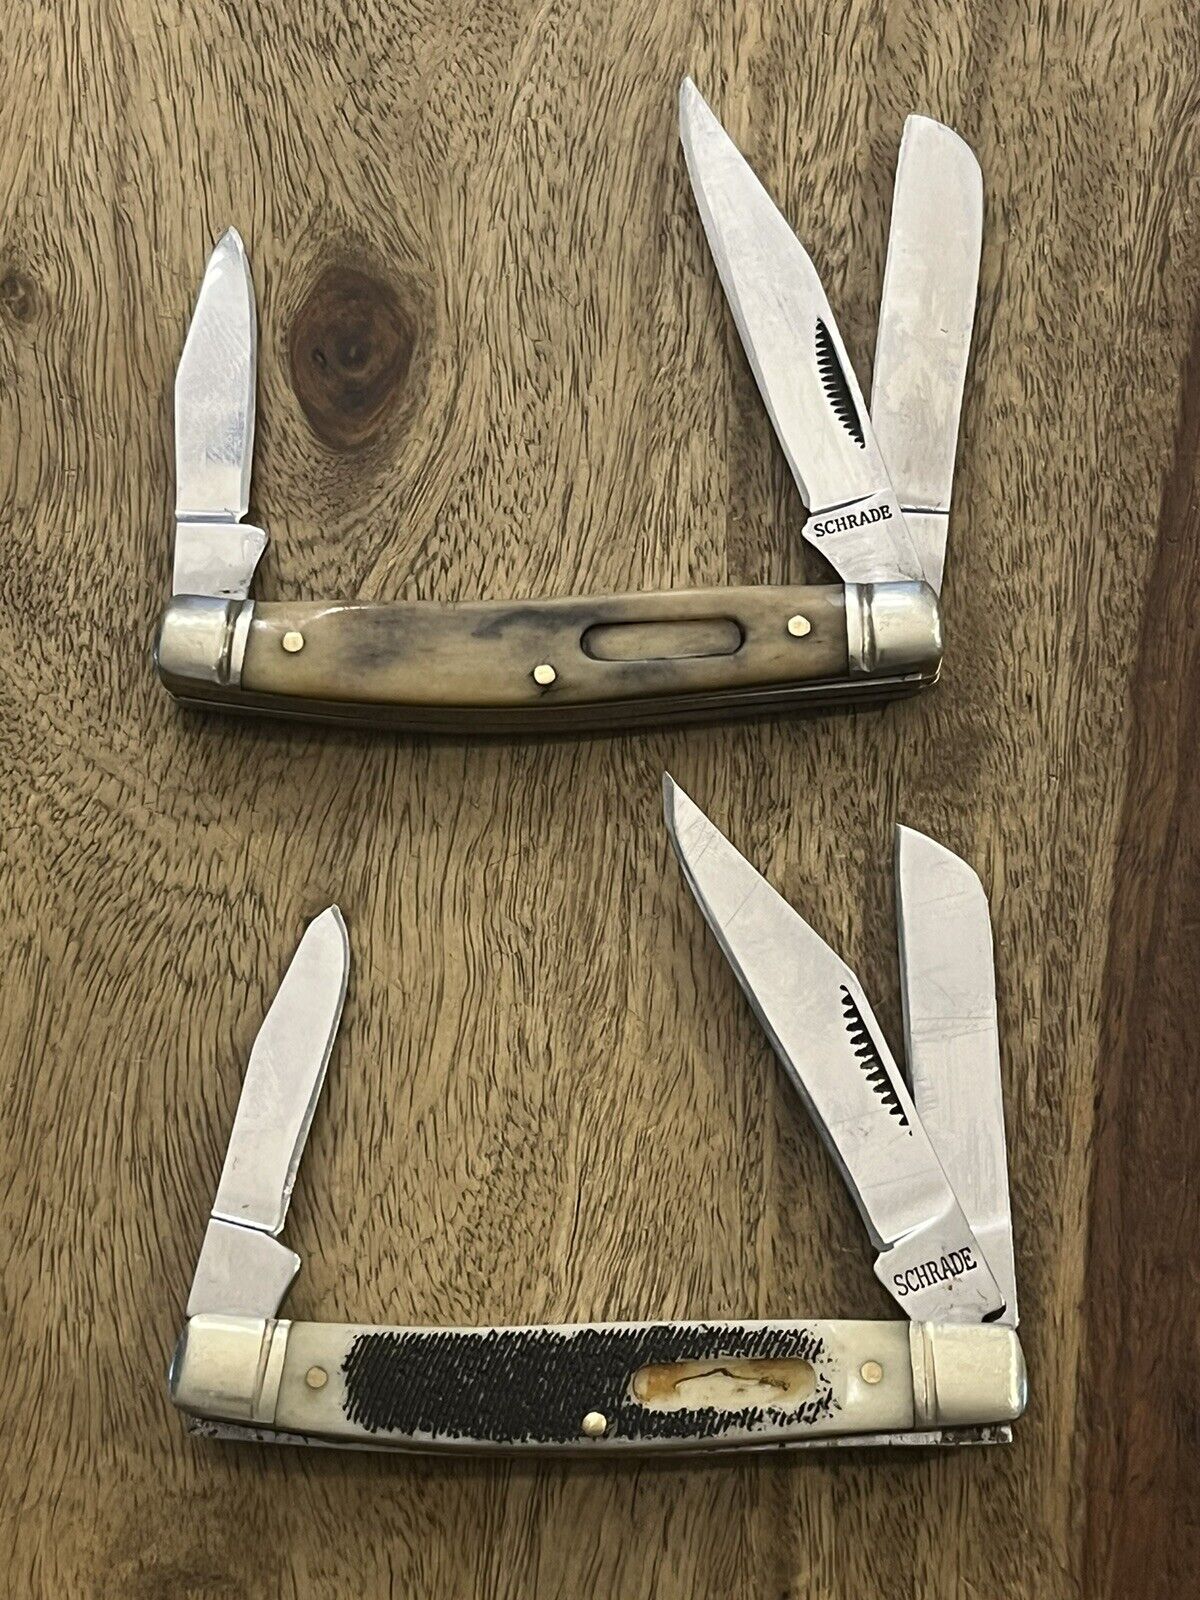 Schrade Old Timer 34OTB Pocket Knives Very Nice (Lot Of 2) ~TASKCo